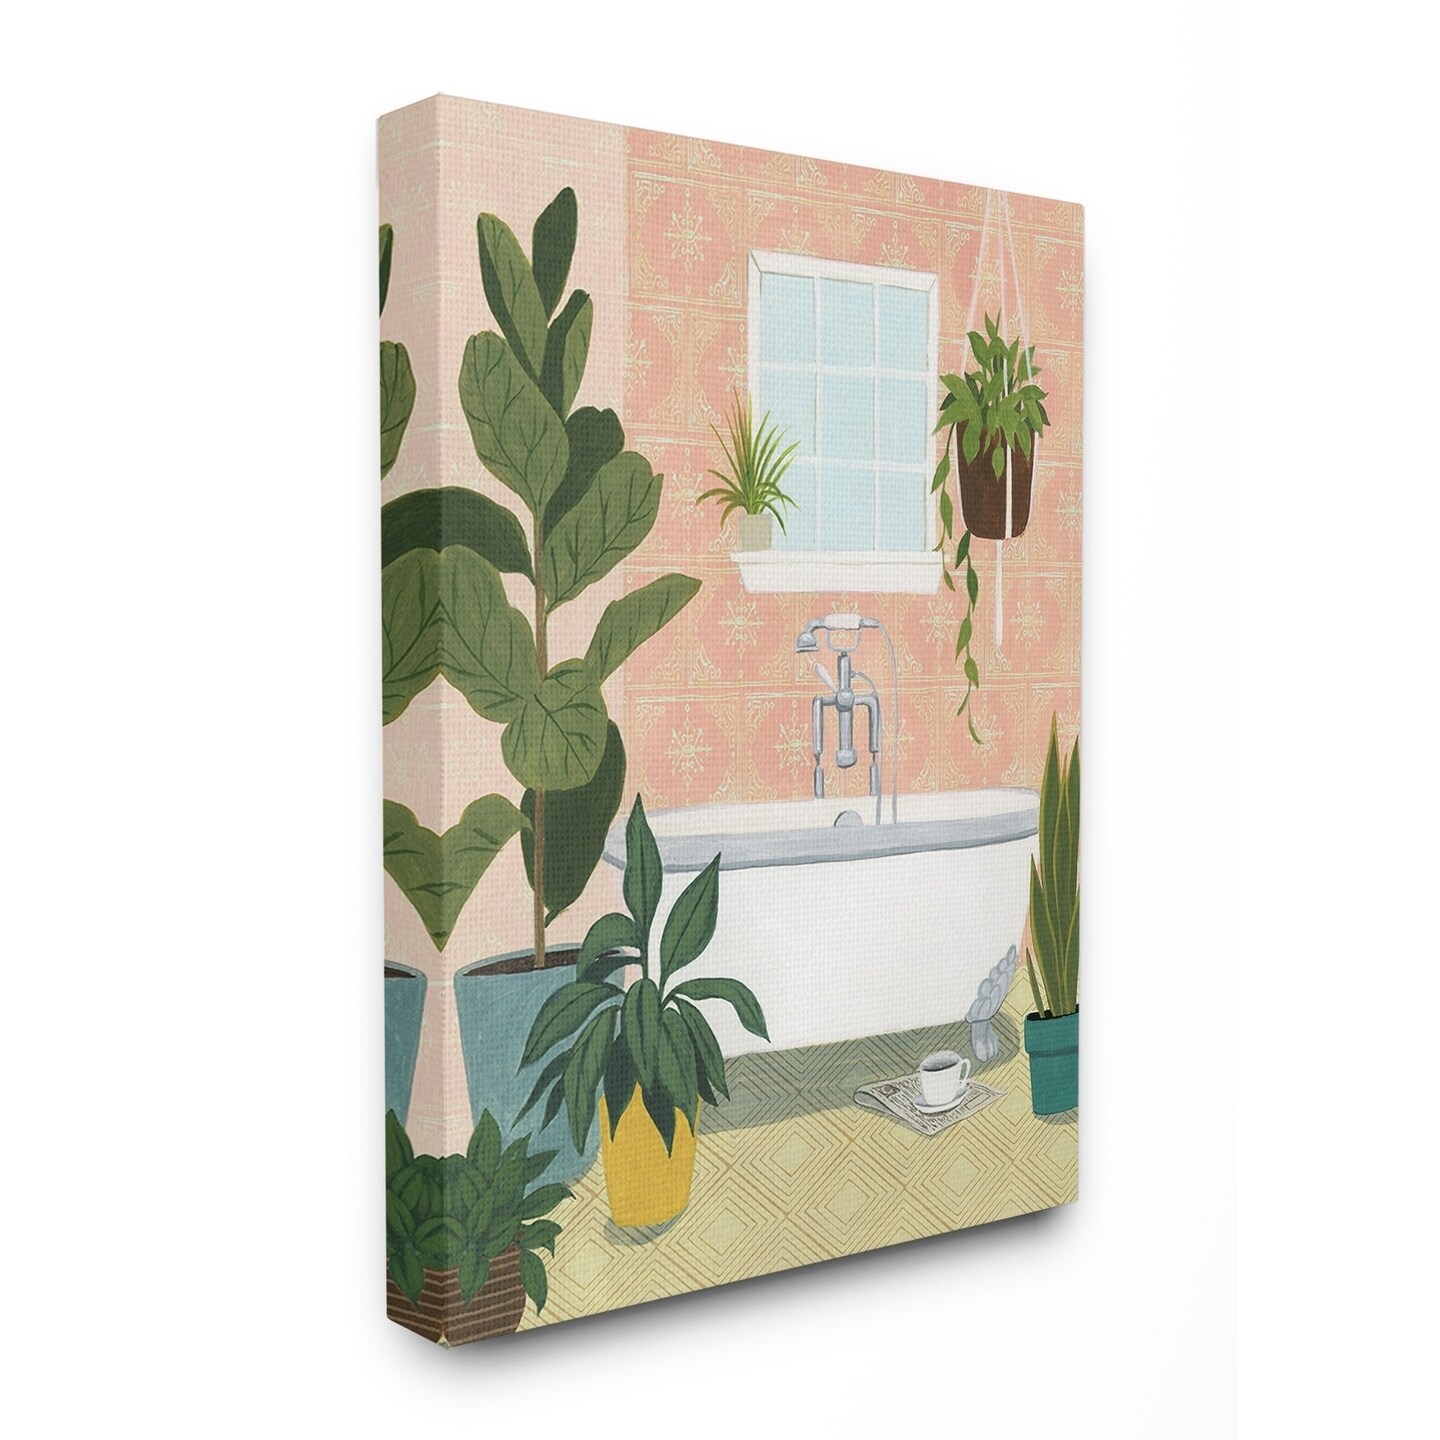 Shop Porch Den Peach Walls Bathroom Oasis Scene With Fiddle Leaf Plants Canvas Wall Art 16 X 20 Overstock 26890555